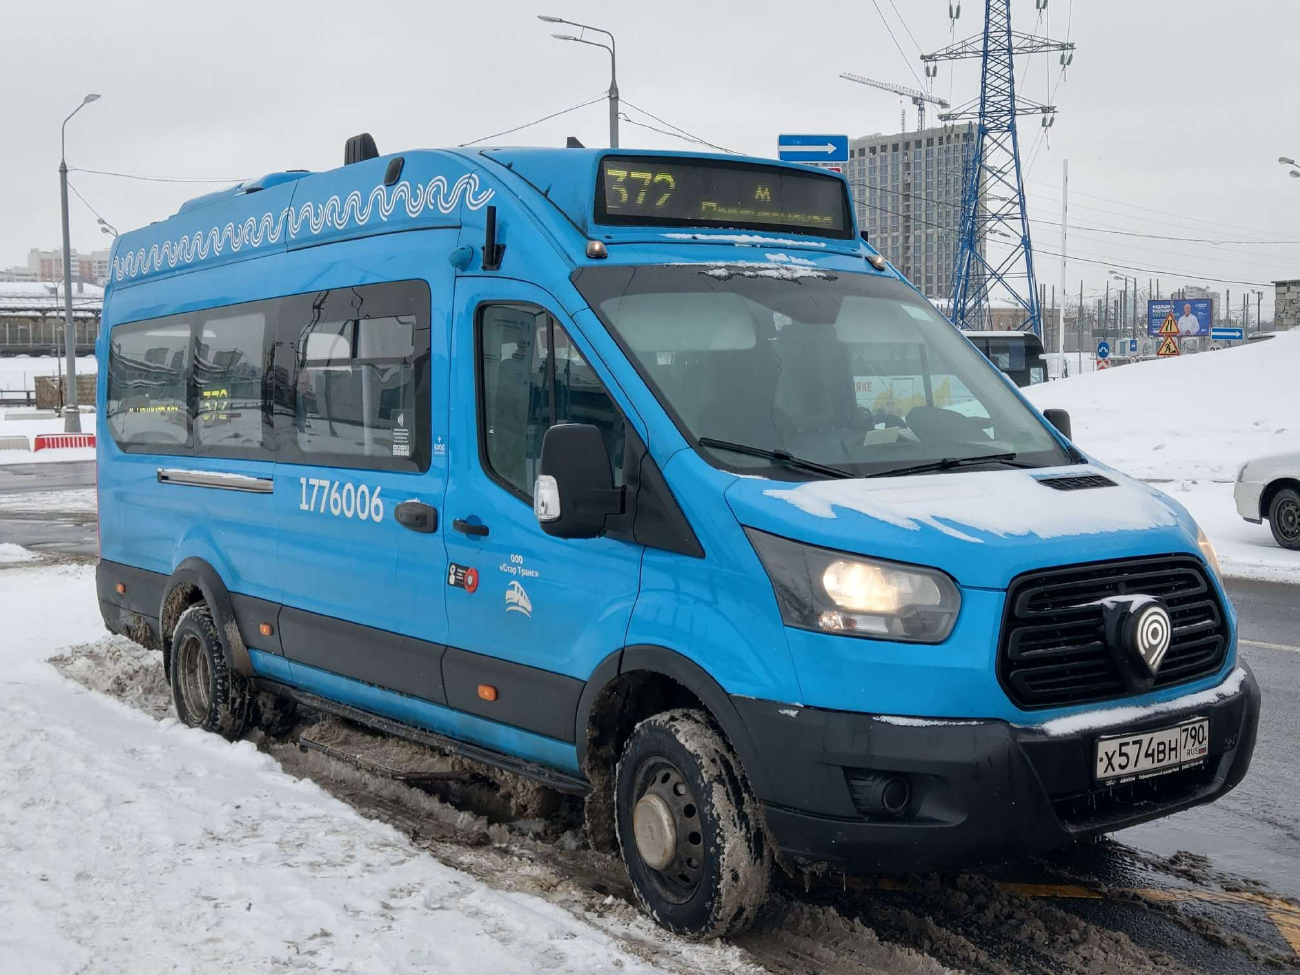 Moscow, Nidzegorodec-222708 (Ford Transit FBD) # 1776006